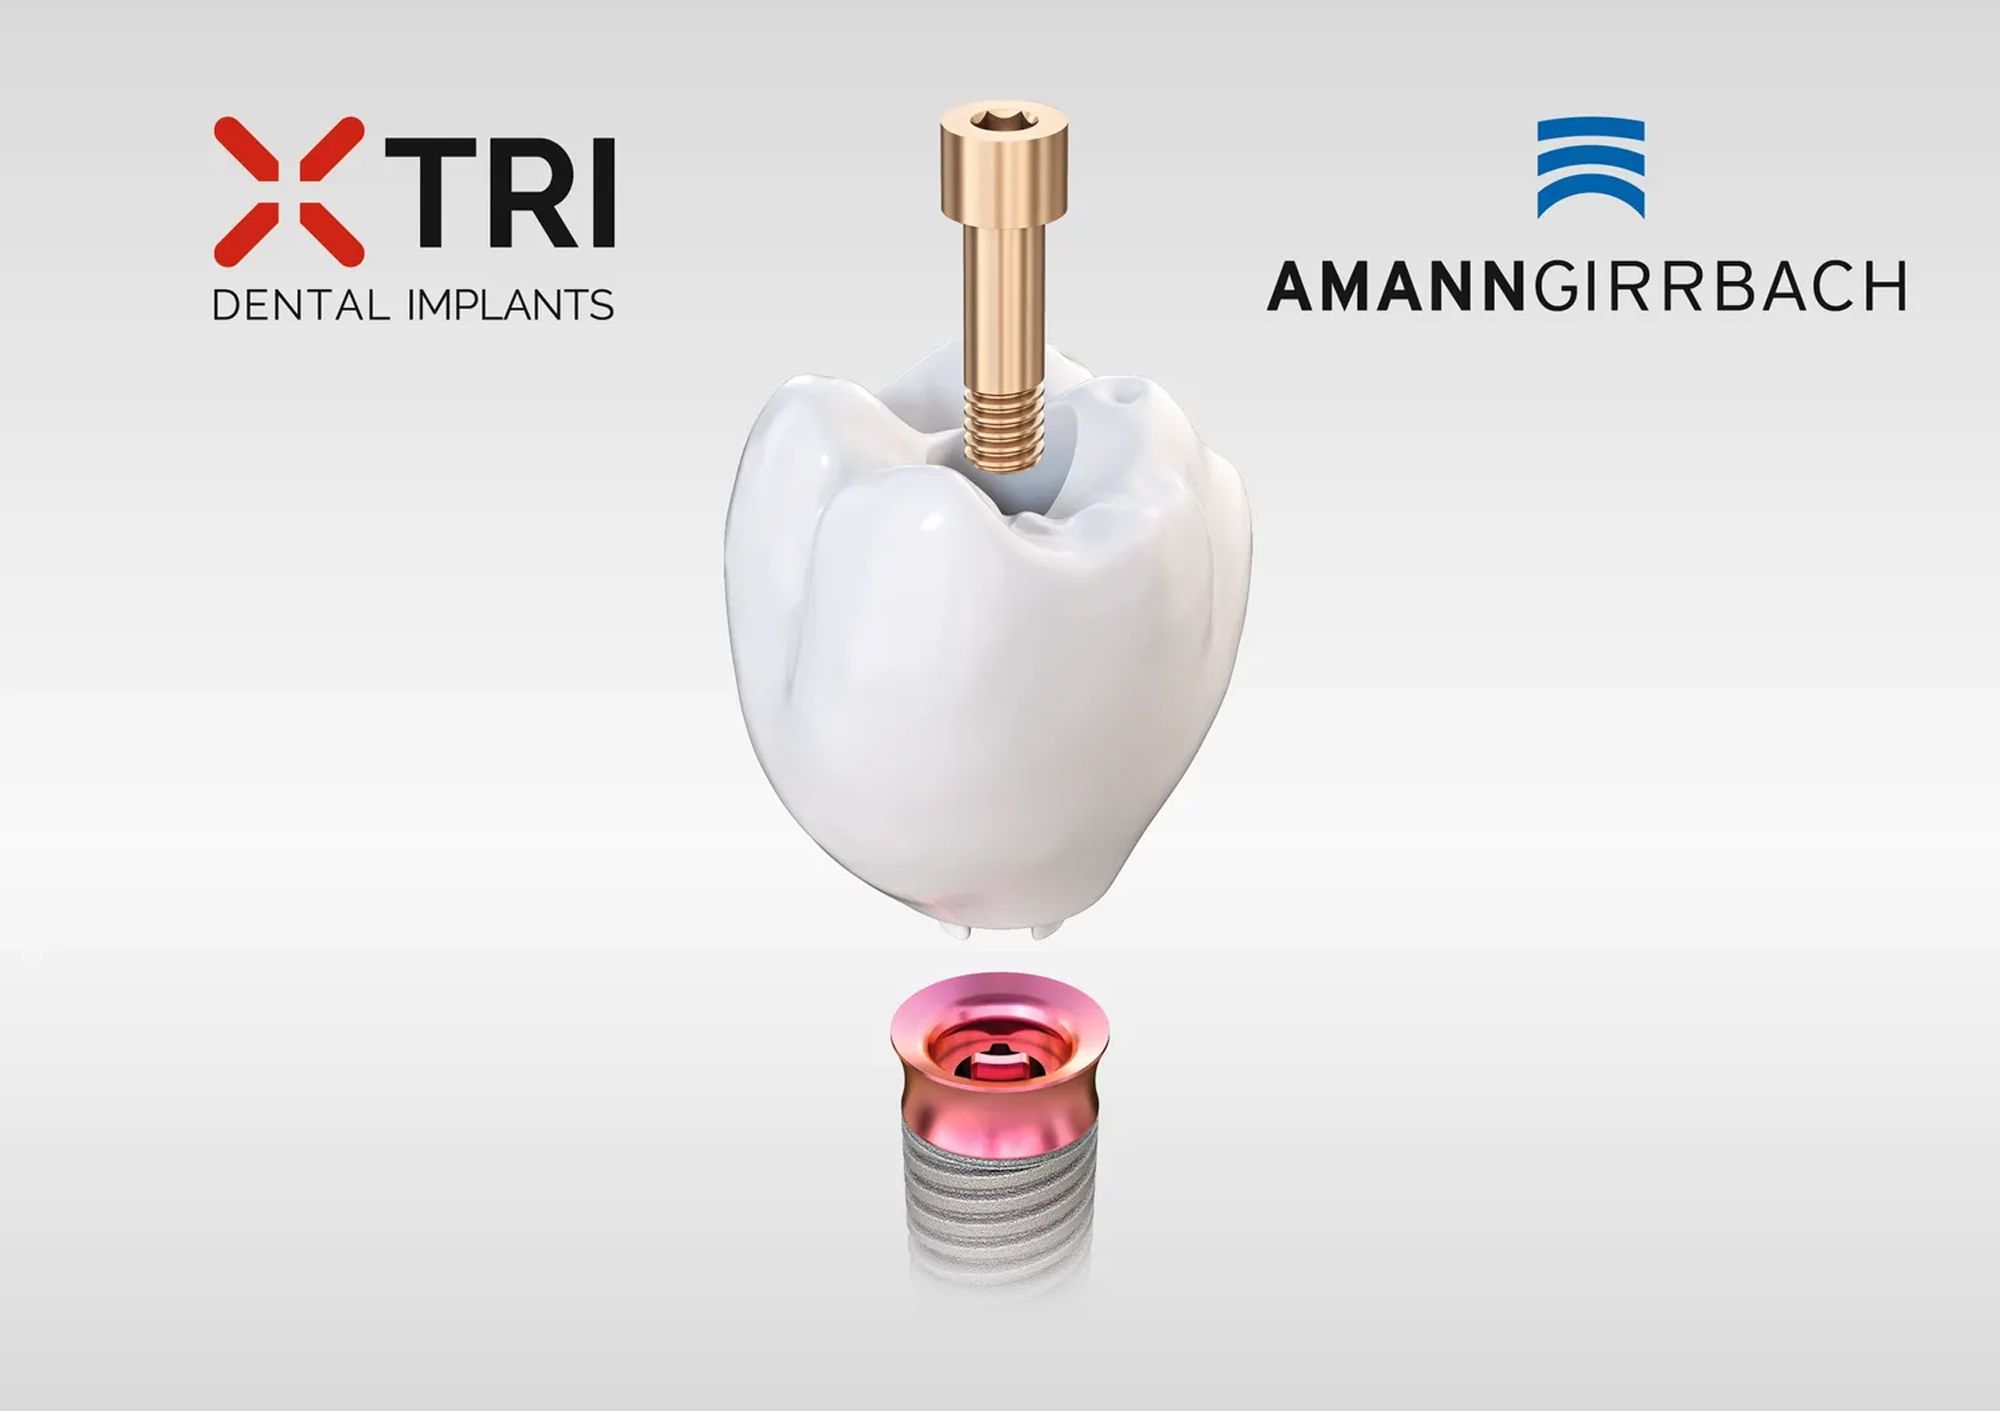 Amann Girrbach, TRI Dental Implants Partner for New Digital Matrix Implant